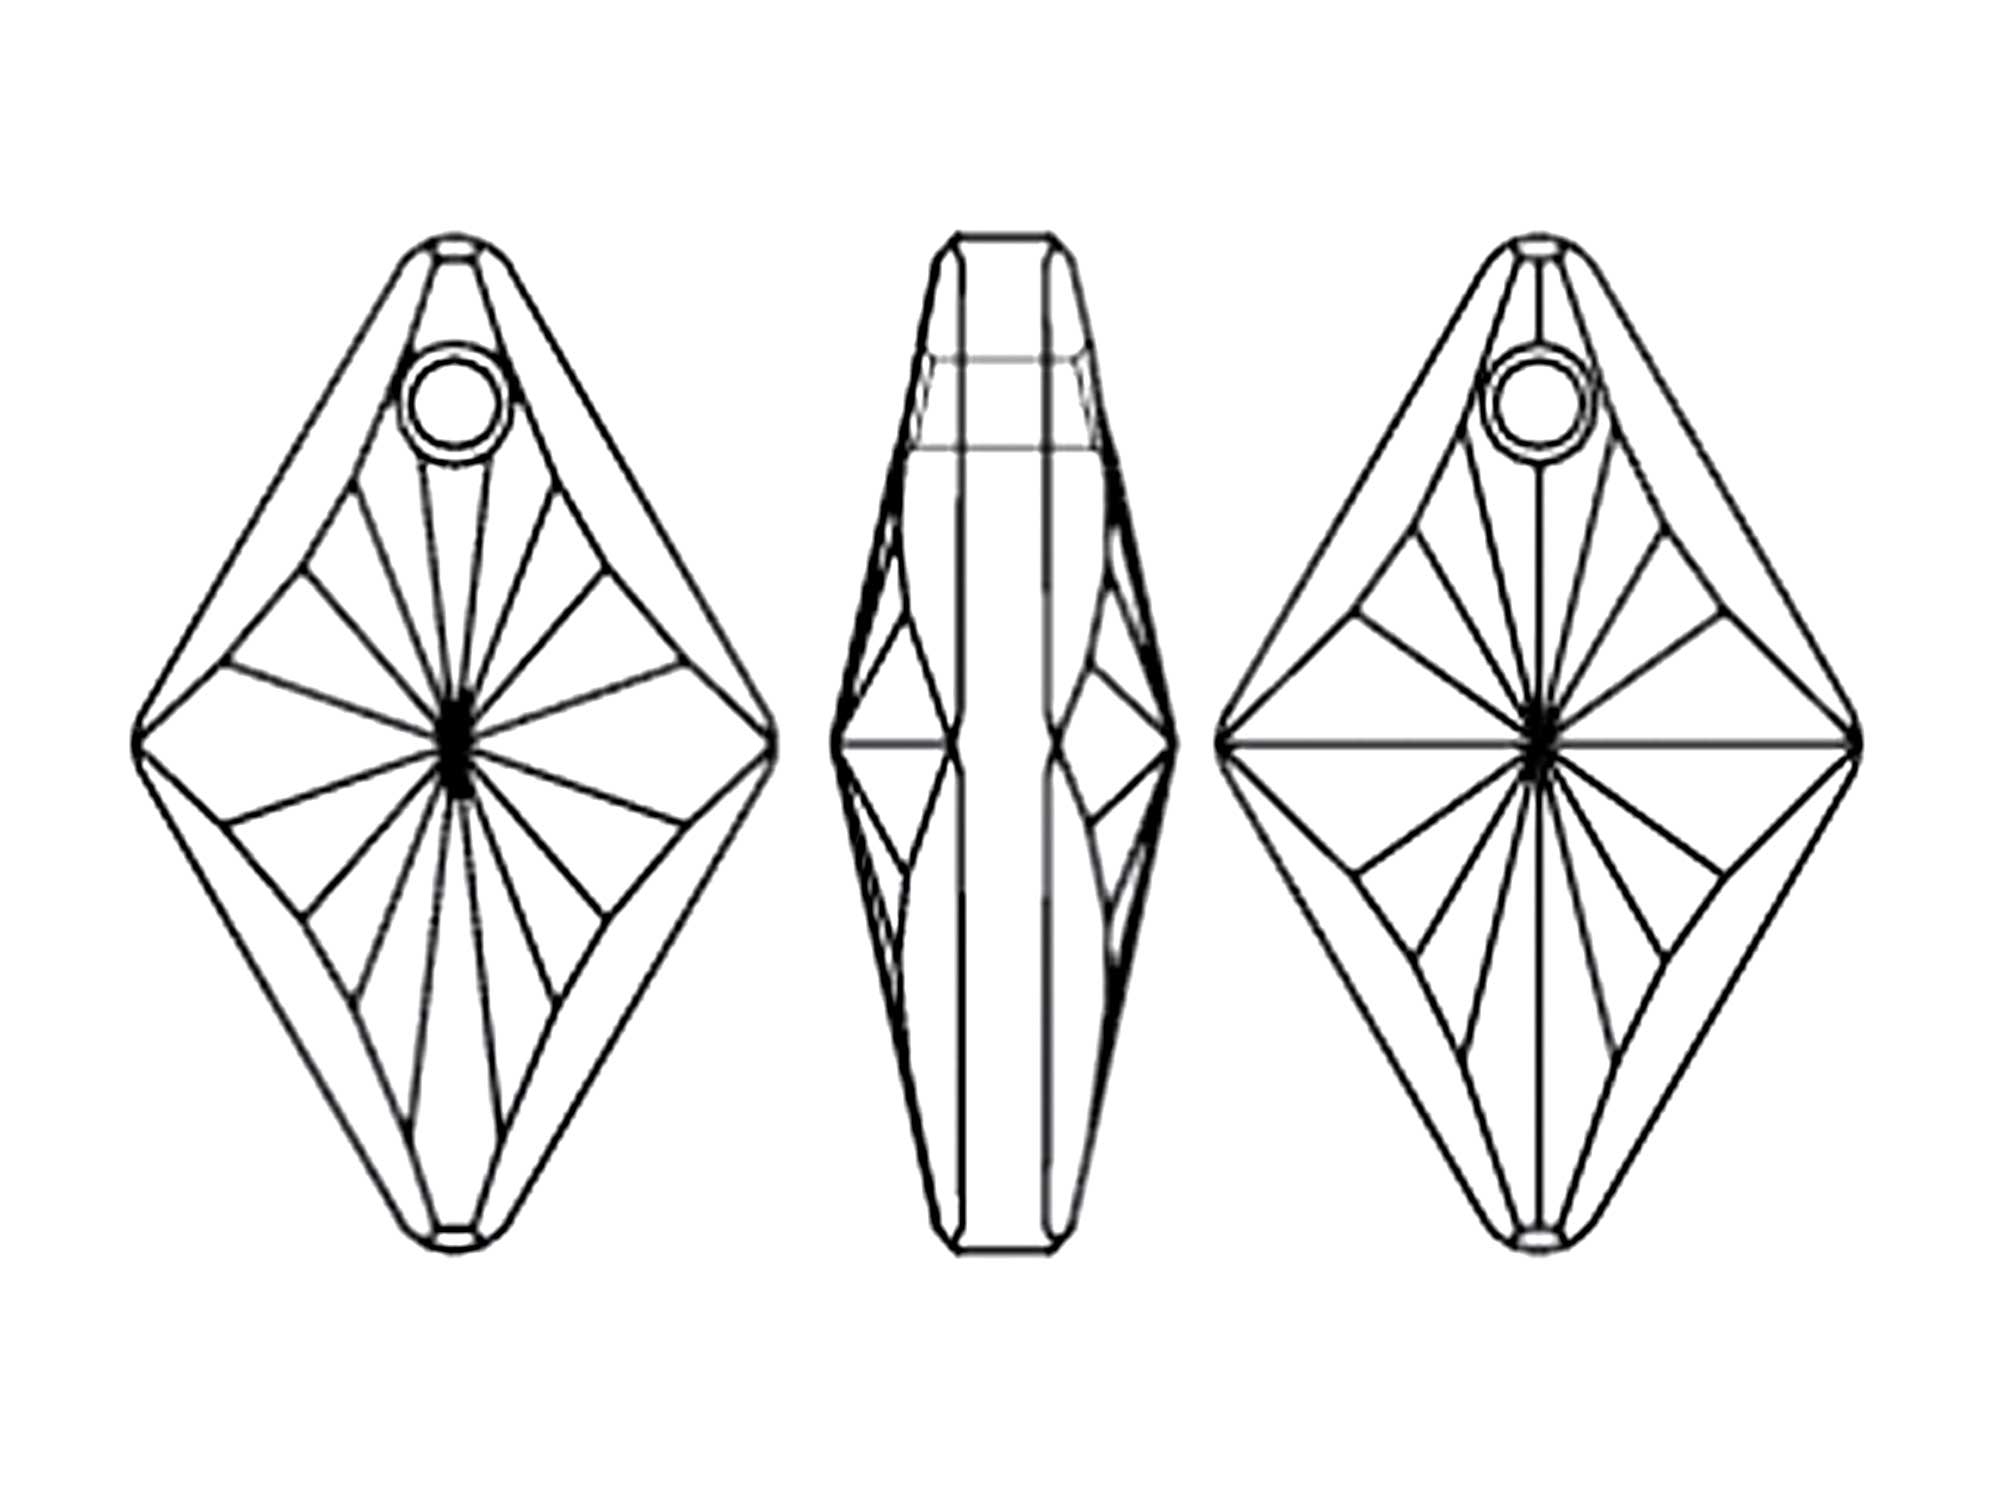 Swarovski Art.# 6320 - Rhombus Pendant in 19mm Siam, 2pcs